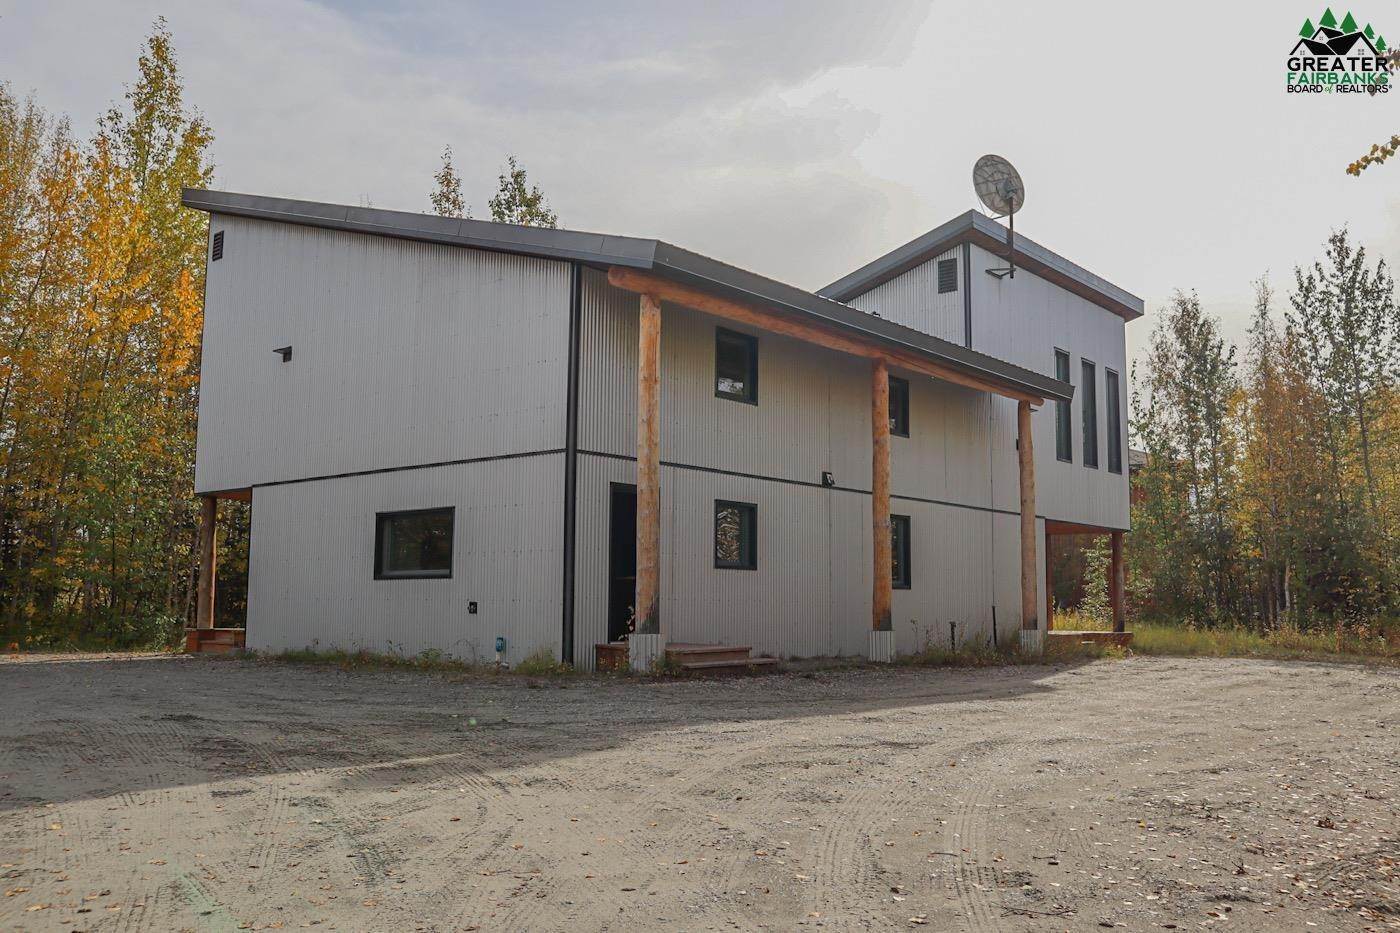 2. Duplex Homes for Sale at 2548 DALL SHEEP LANE Fairbanks, Alaska 99709 United States